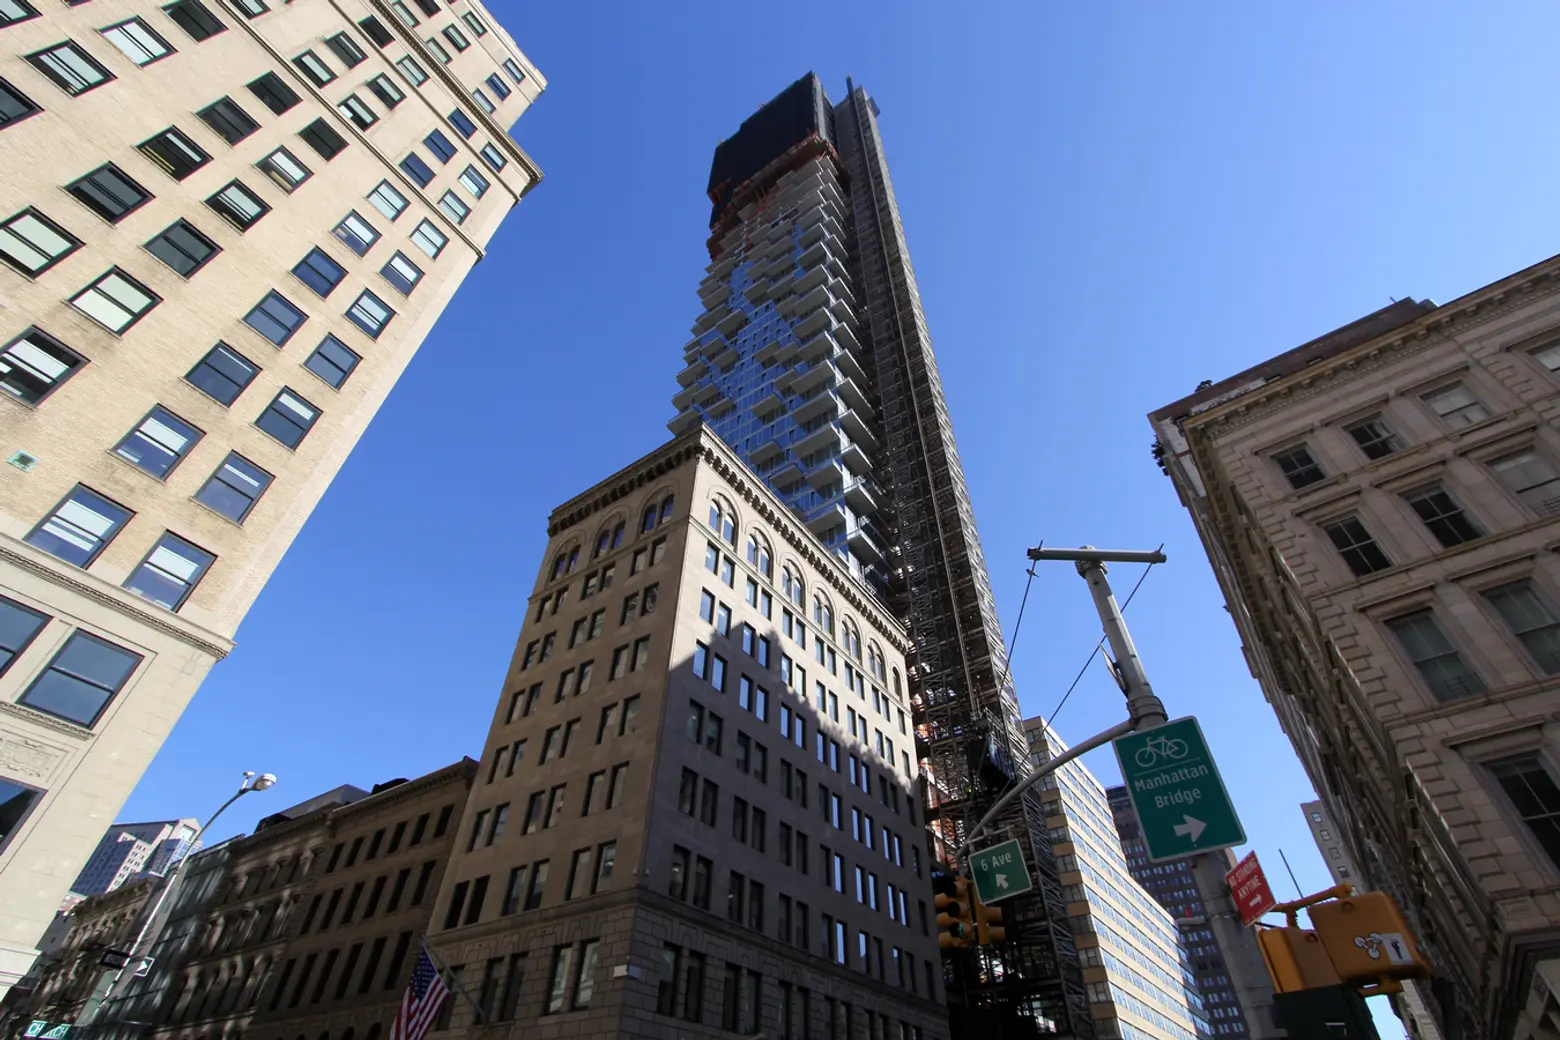 56 Leonard, Herzog de Meuron, Tribeca, skyscrapers, Alexico, Hines, Luxury Condos, NYC Developments